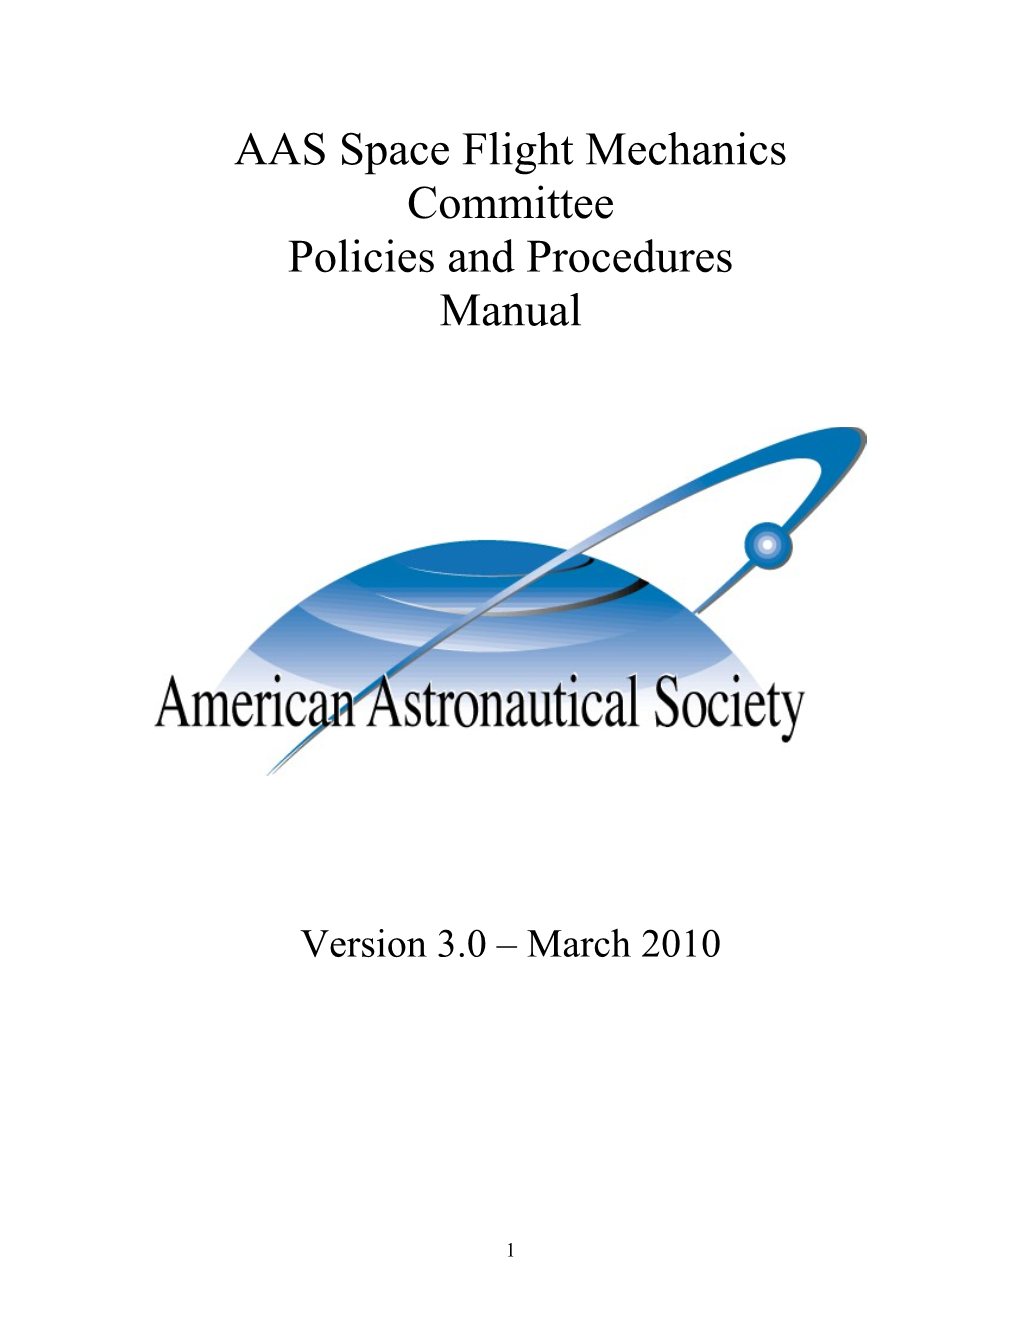 AAS Space Flight Mechanics Policies and Procedures Manual